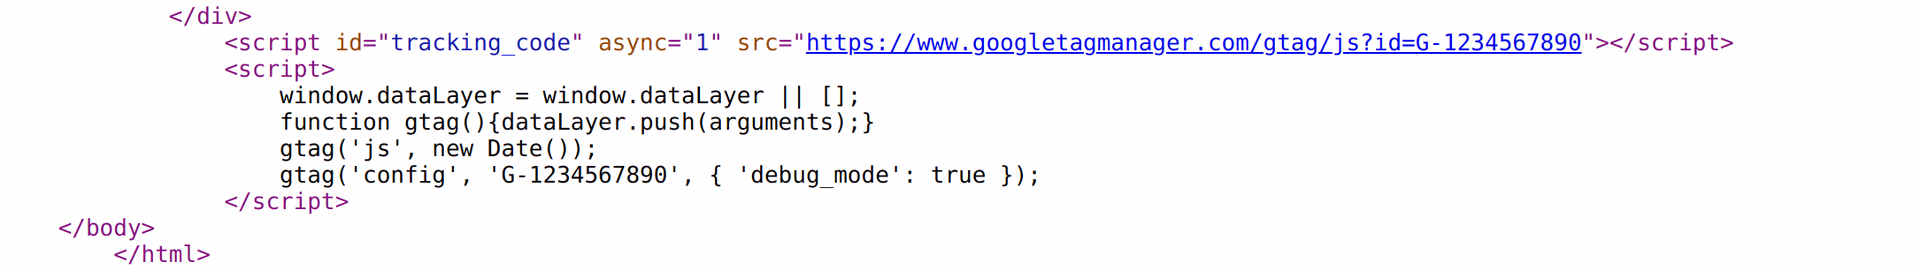 Odoo 15.0 Google Analytics 4 Global Site Tag (gtag.js) global site tag script code